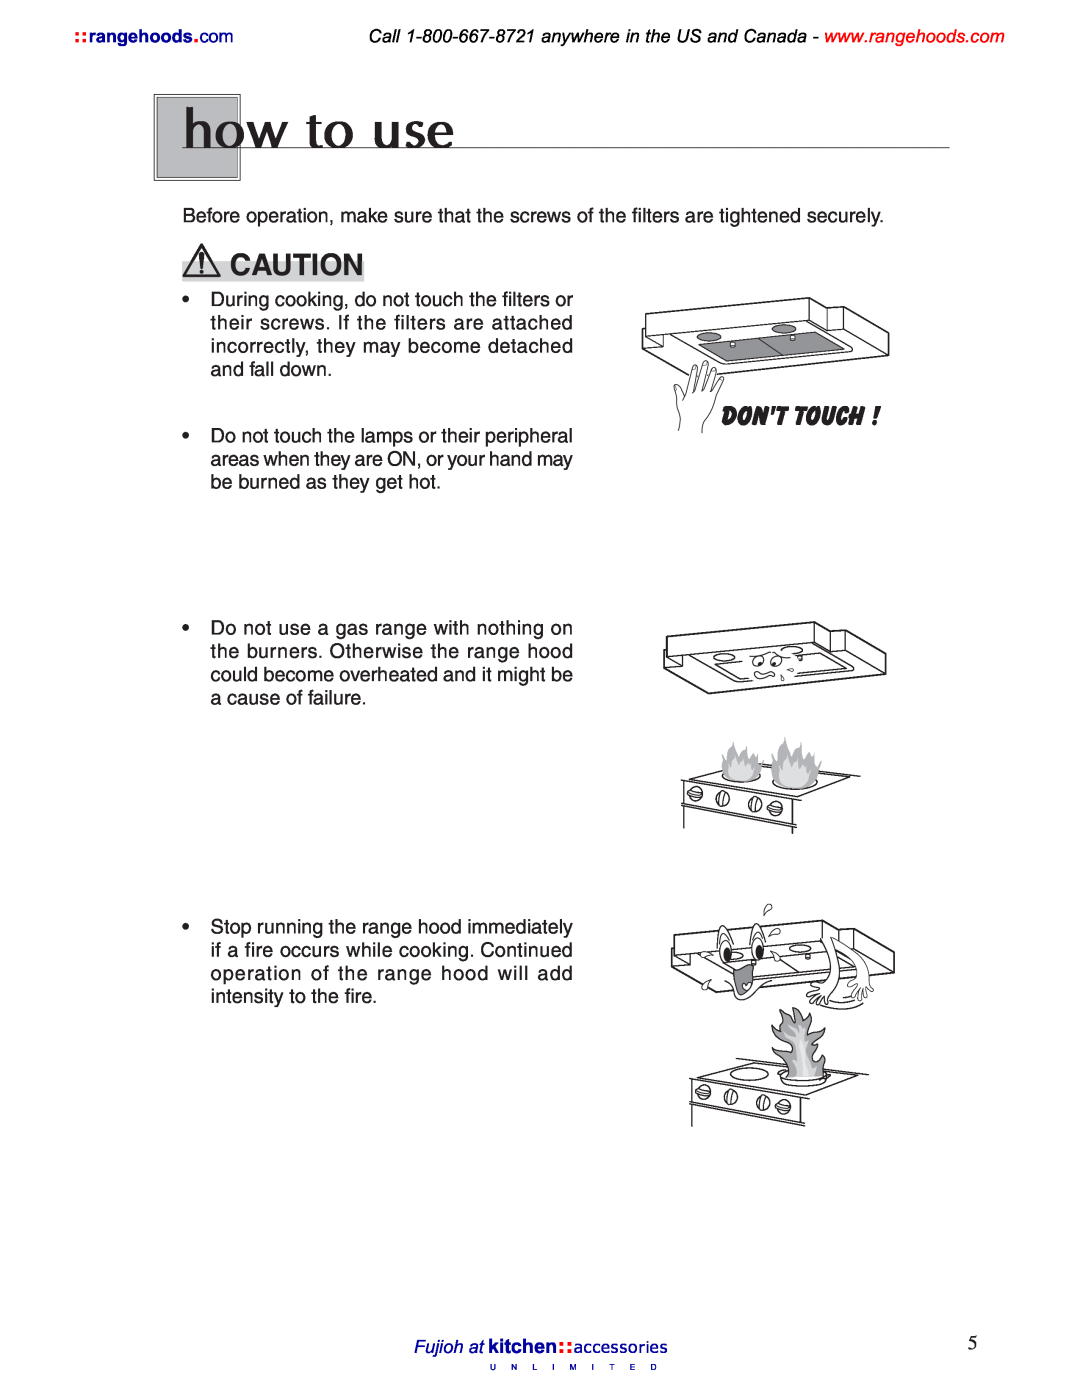 Fujioh 021, BUF-011 operation manual how to use 